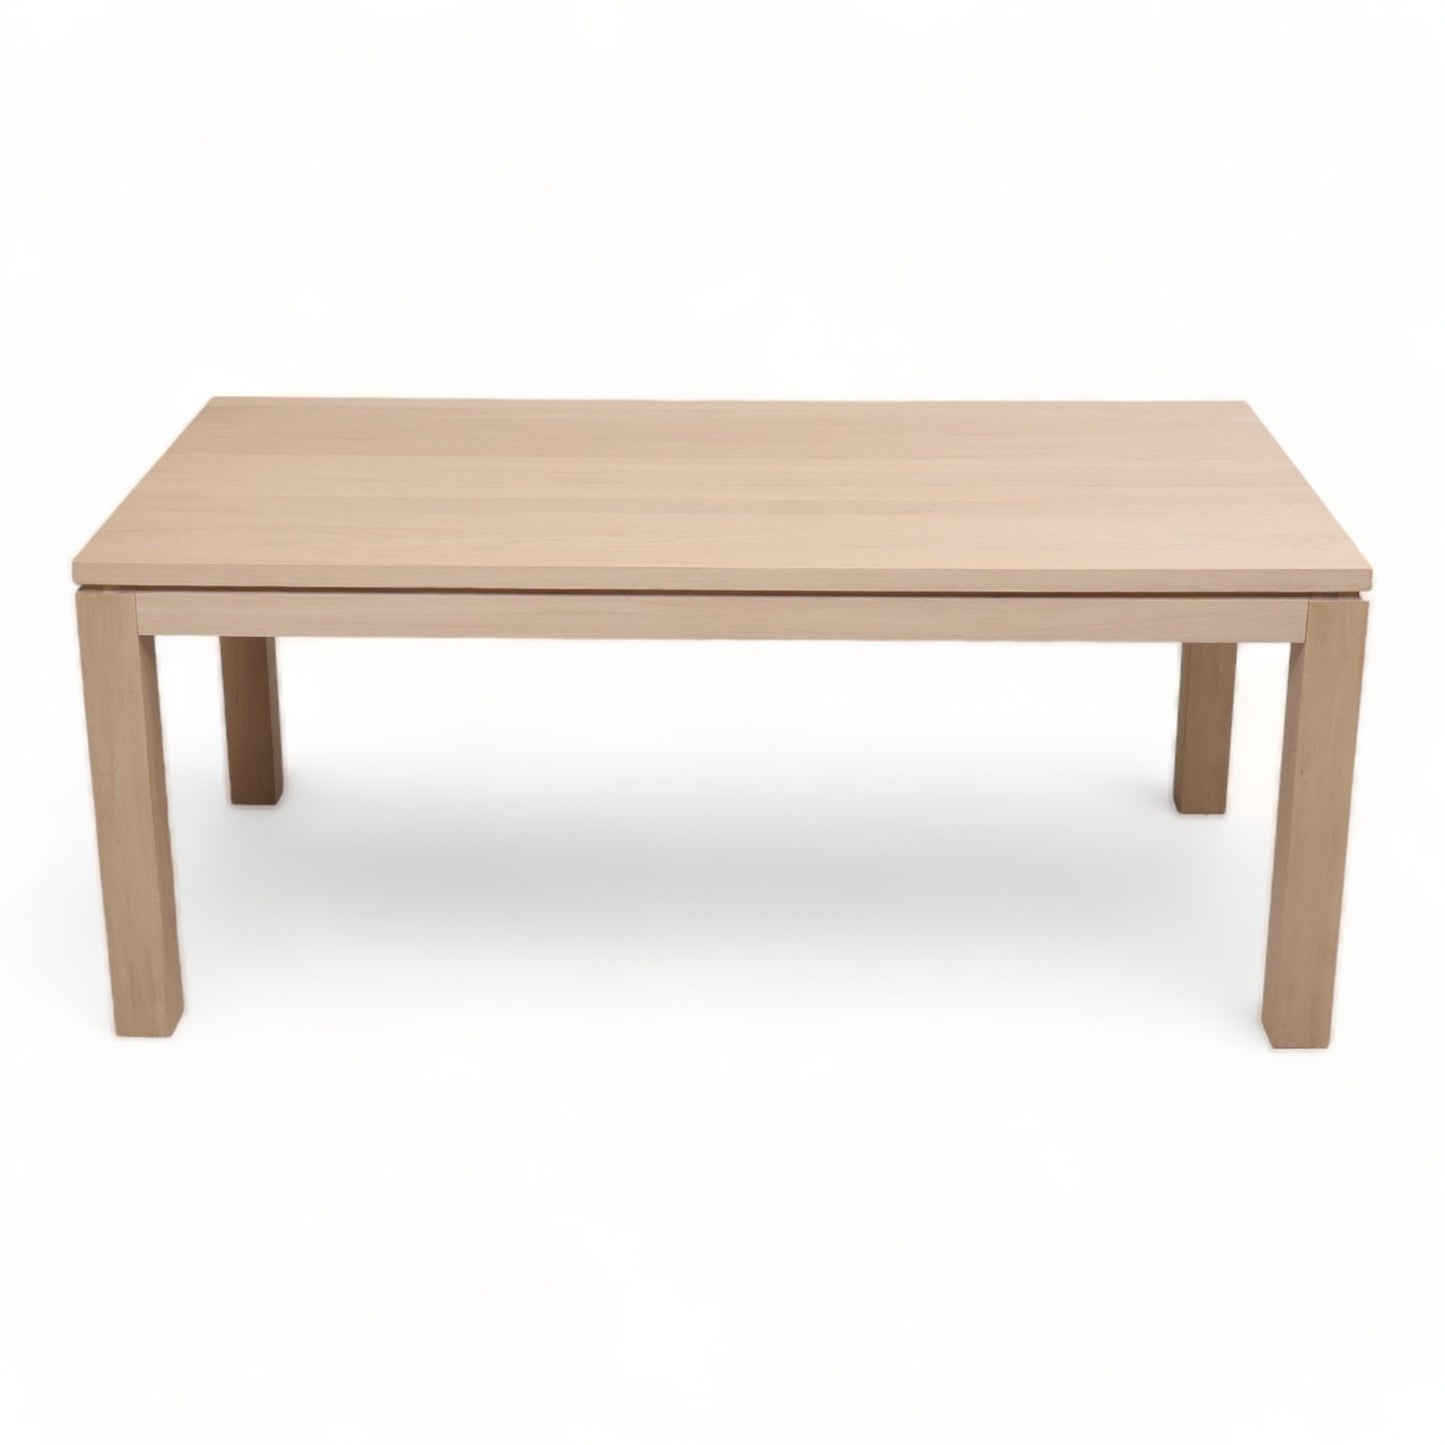 Kvalitetssikret | 180x90 cm, moderne Tribeca spisebord i lys eik